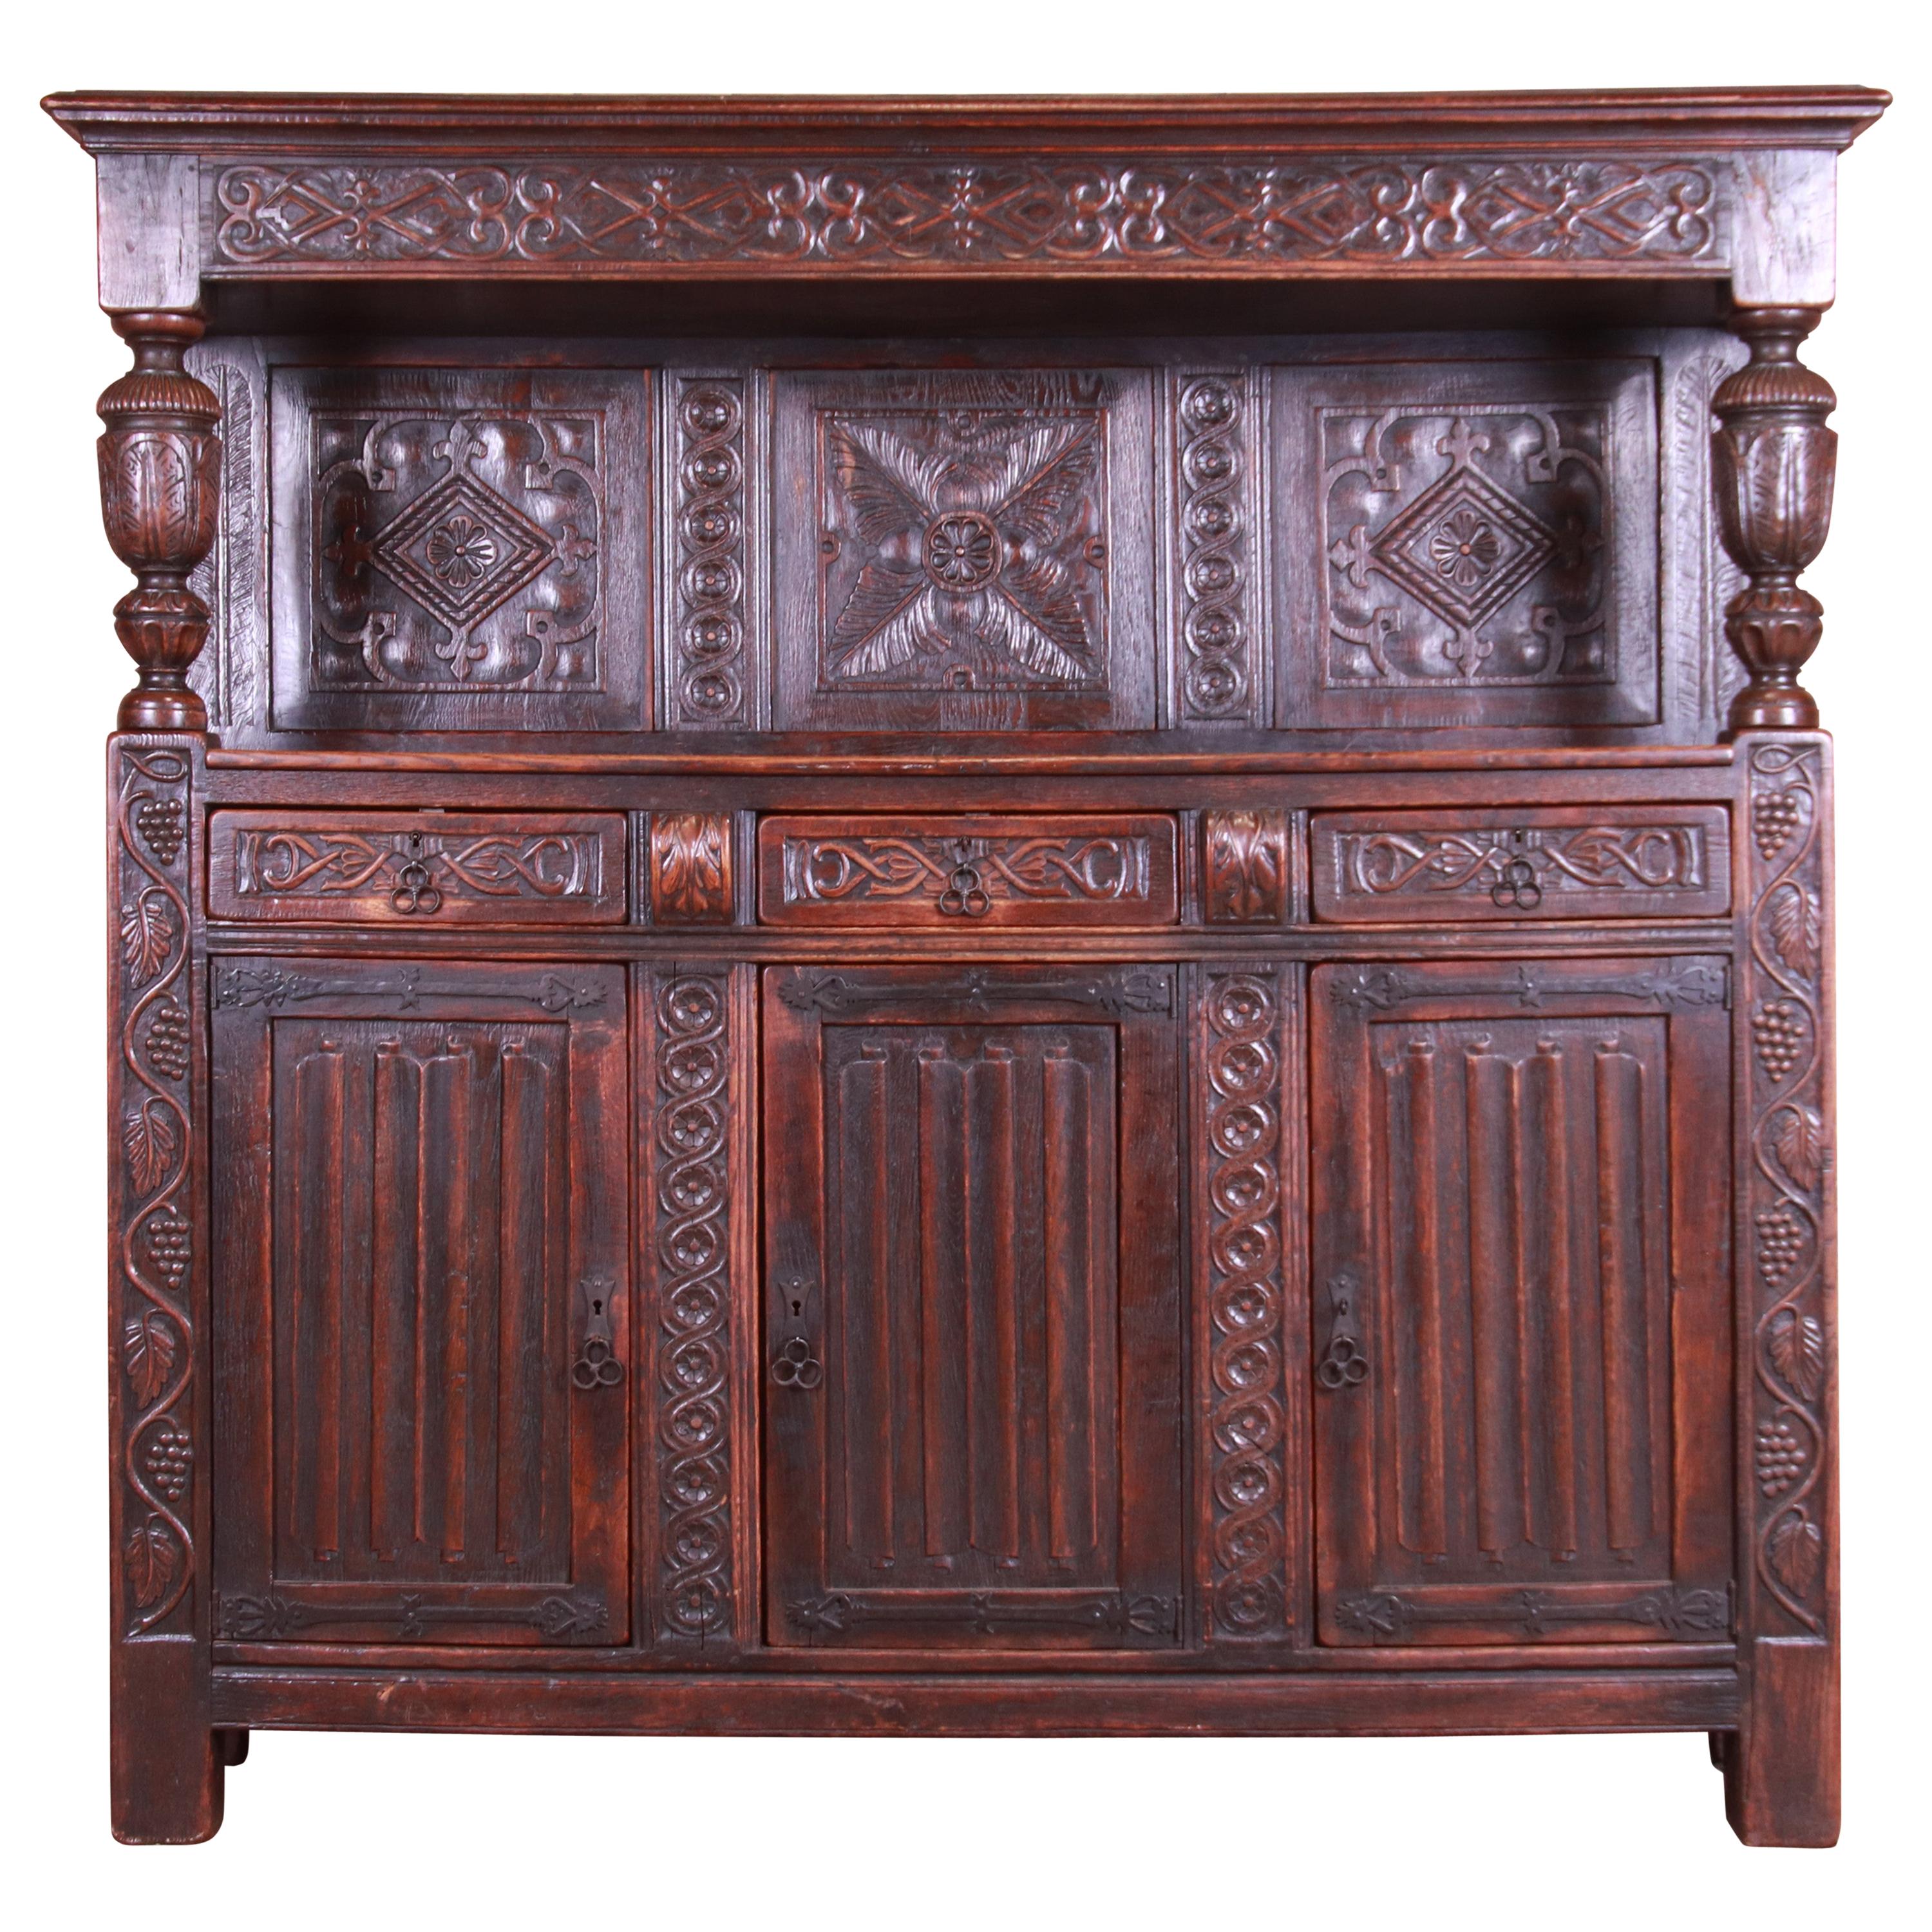 Antique Italian Ornate Carved Oak Sideboard or Bar Cabinet, circa 1800